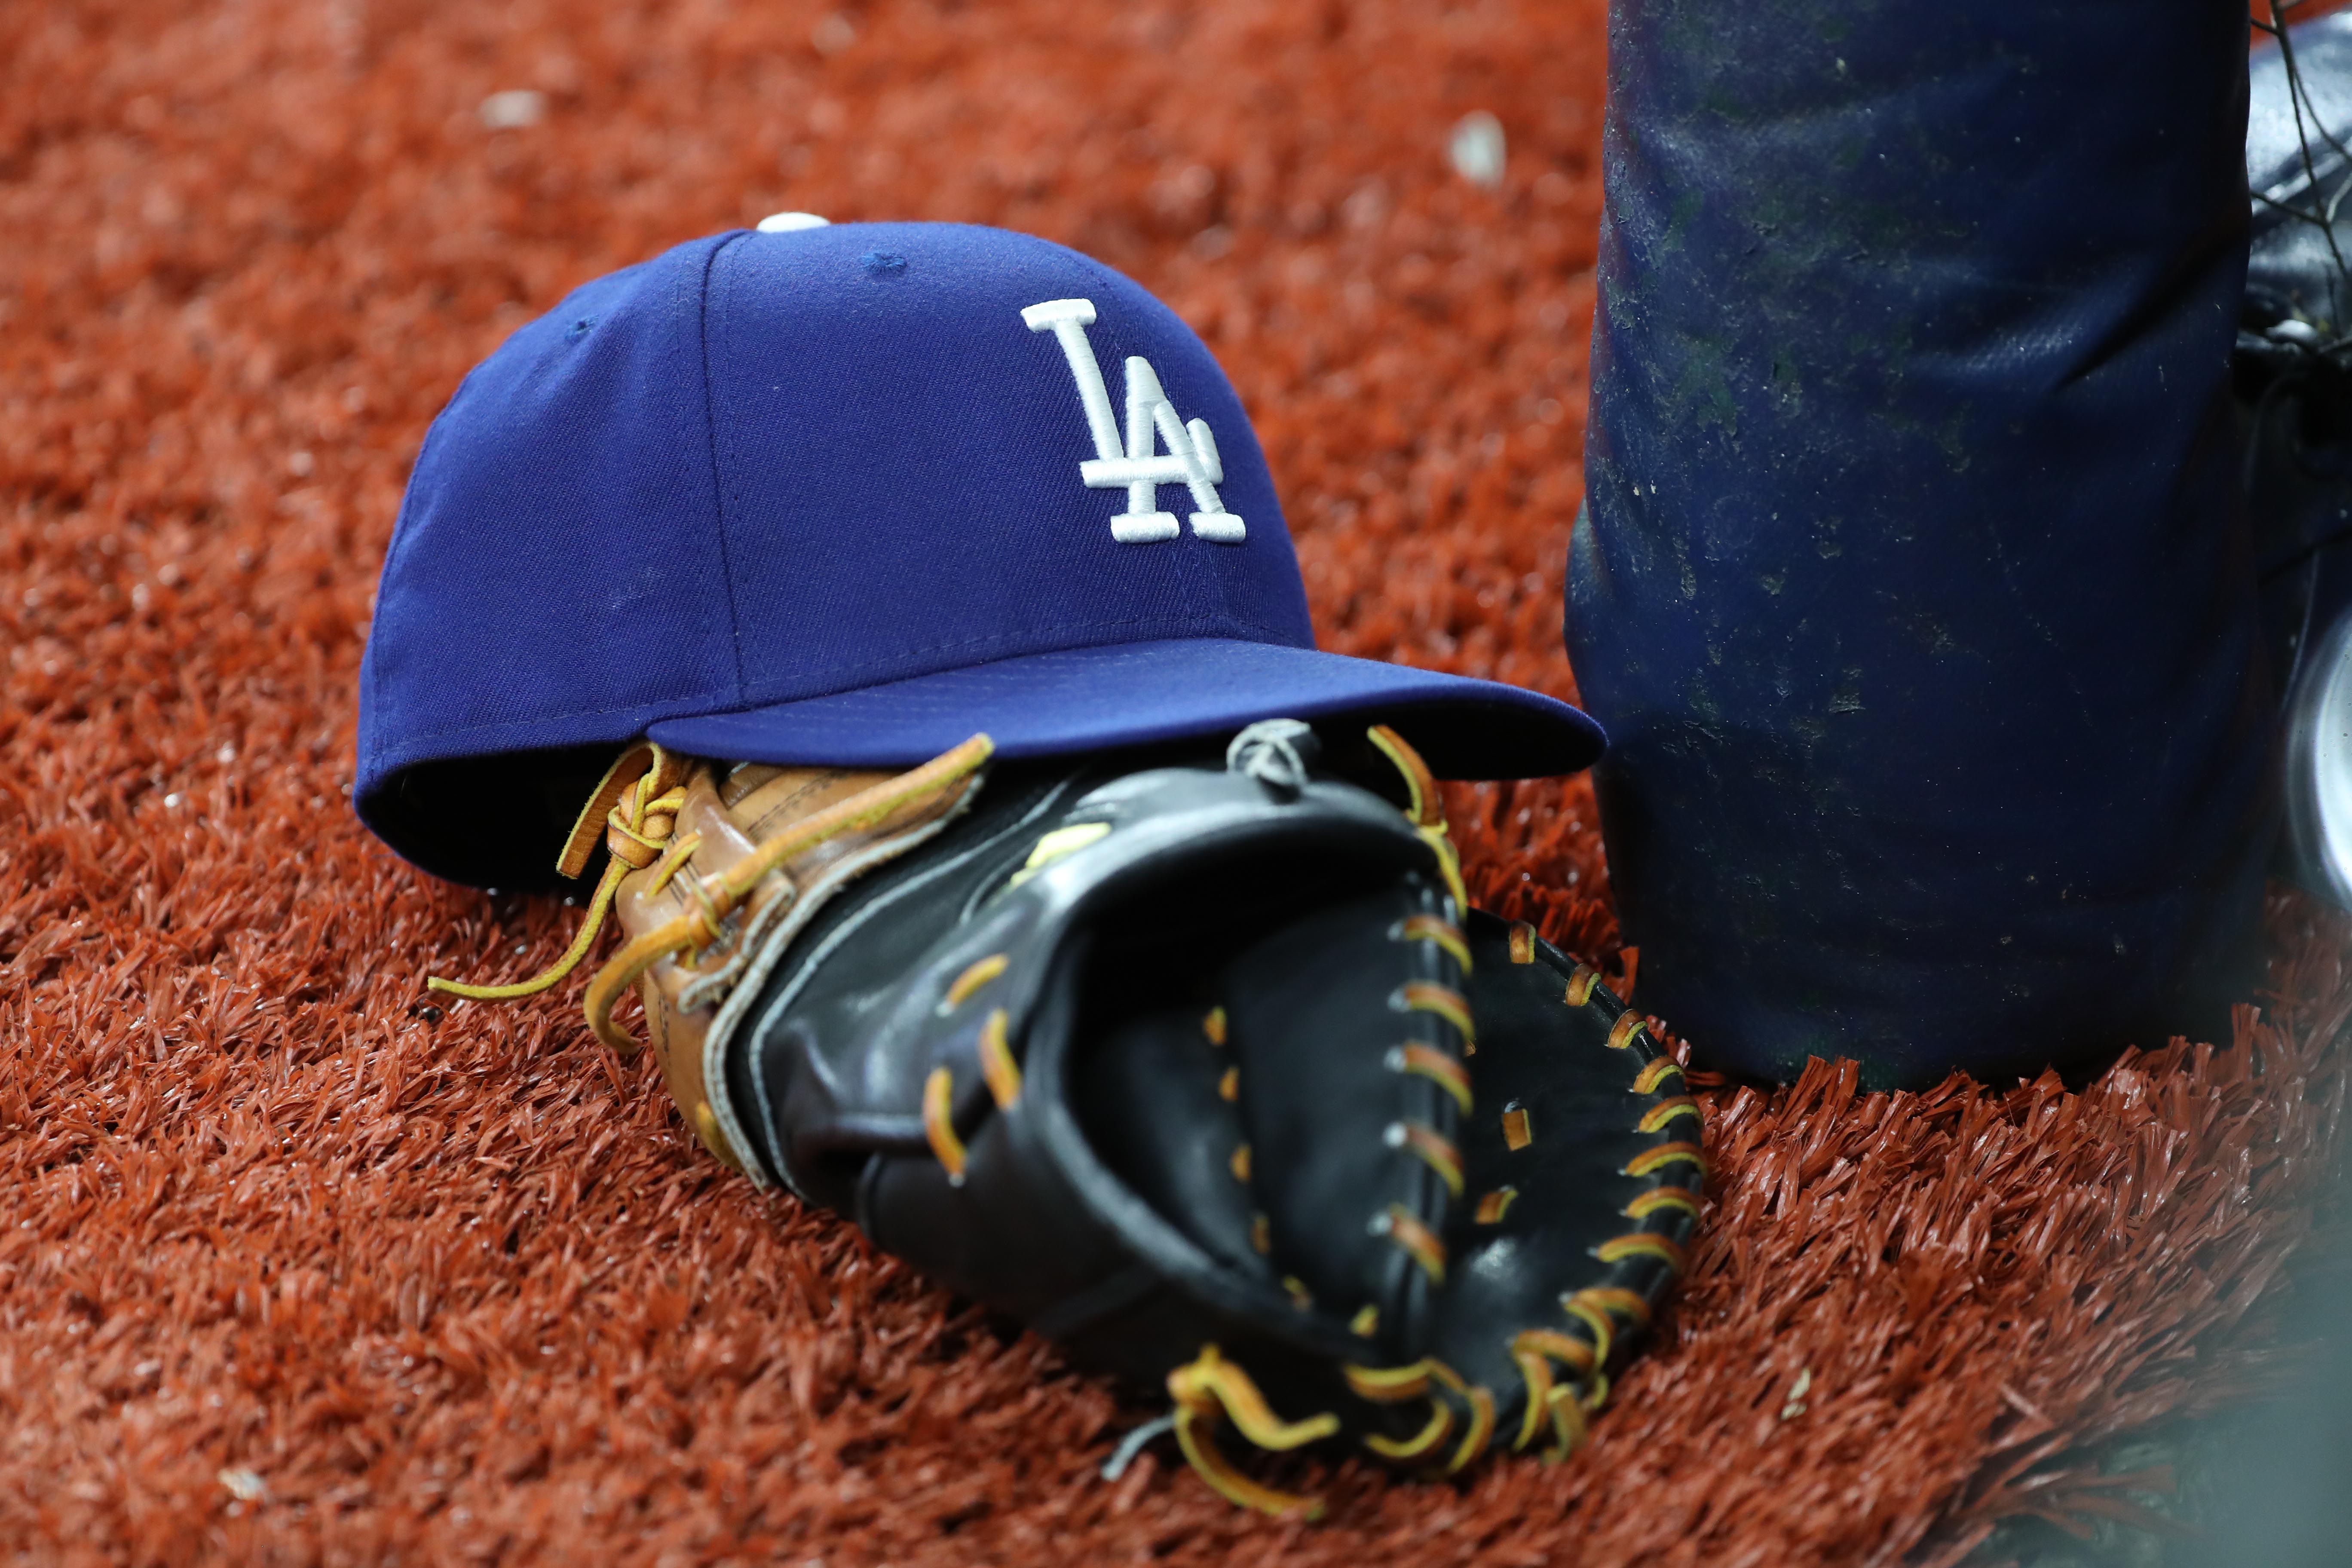 MLB: Los Angeles Dodgers at Tampa Bay Rays